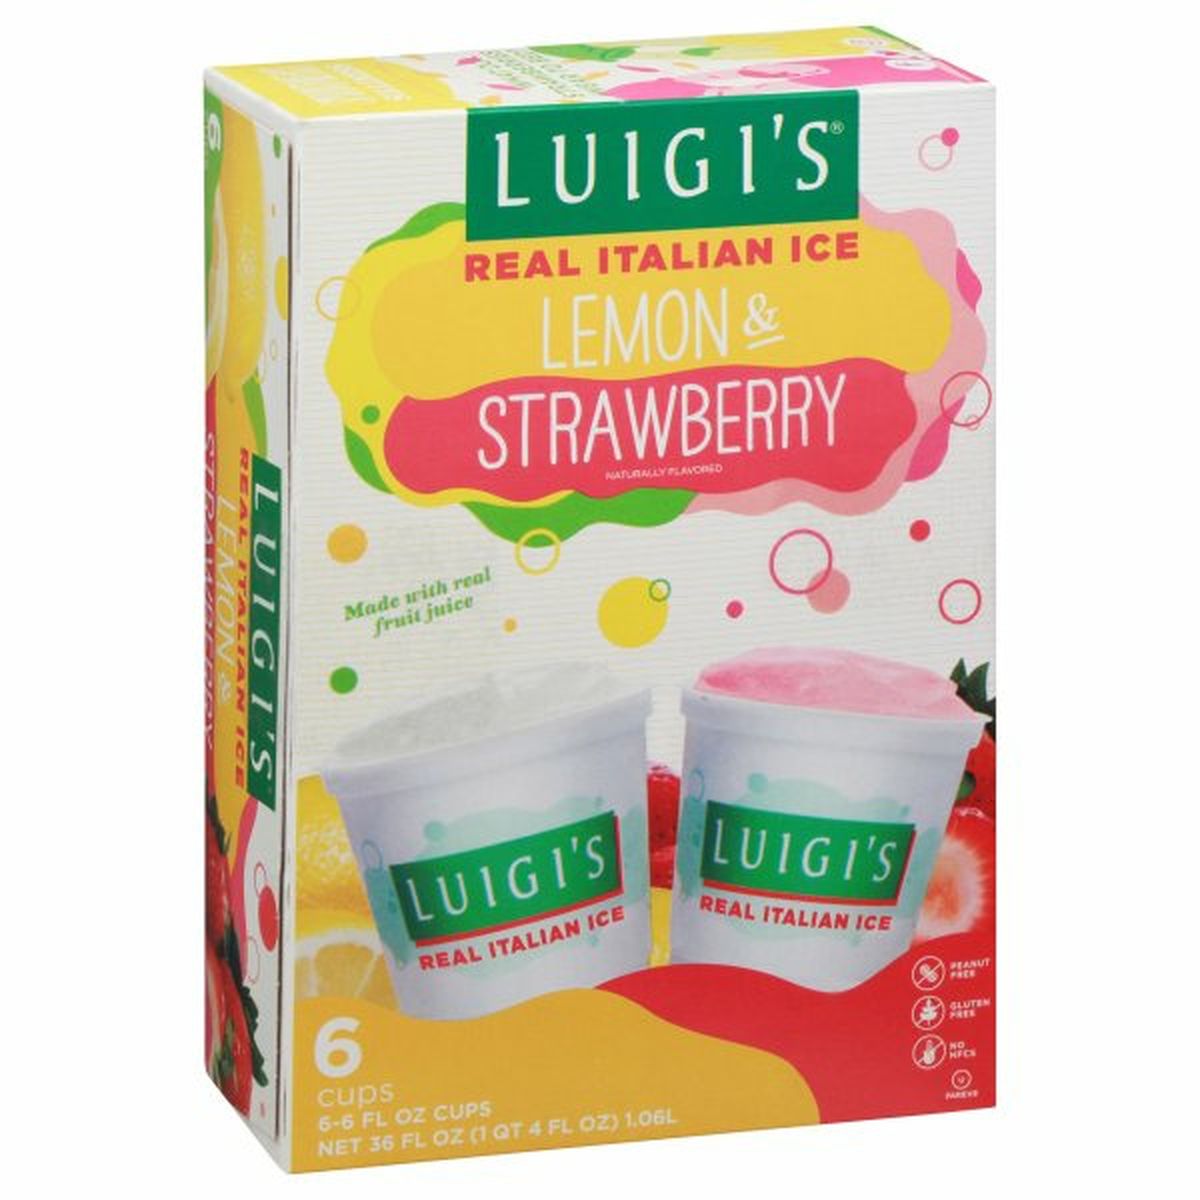 Calories in Luigi's Real Italian Ice, Lemon & Strawberry